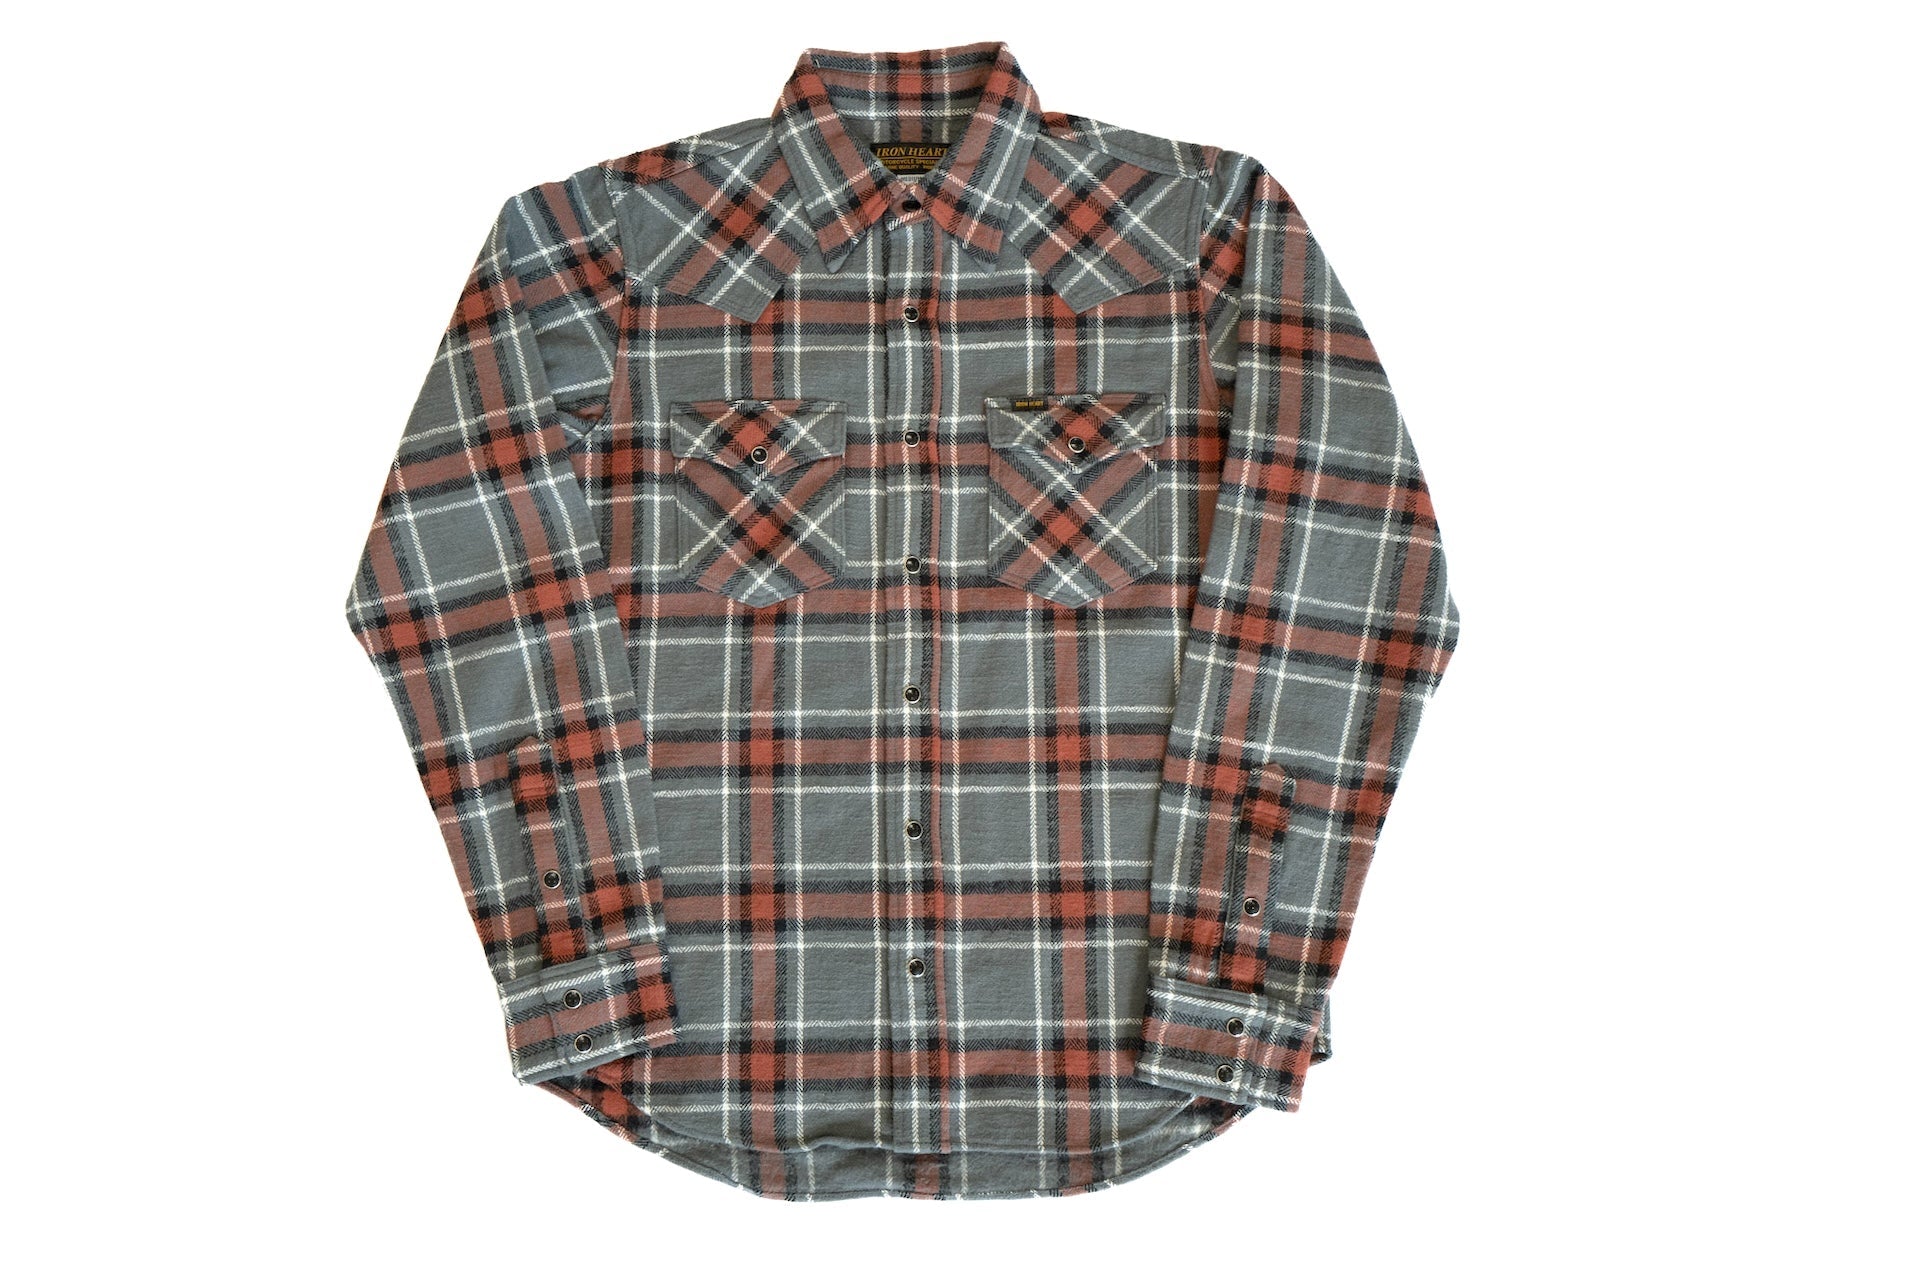 Iron Heart Ultra-Heavy "Slubby" Flannel Classic Check Western Shirt (Battleship Grey)